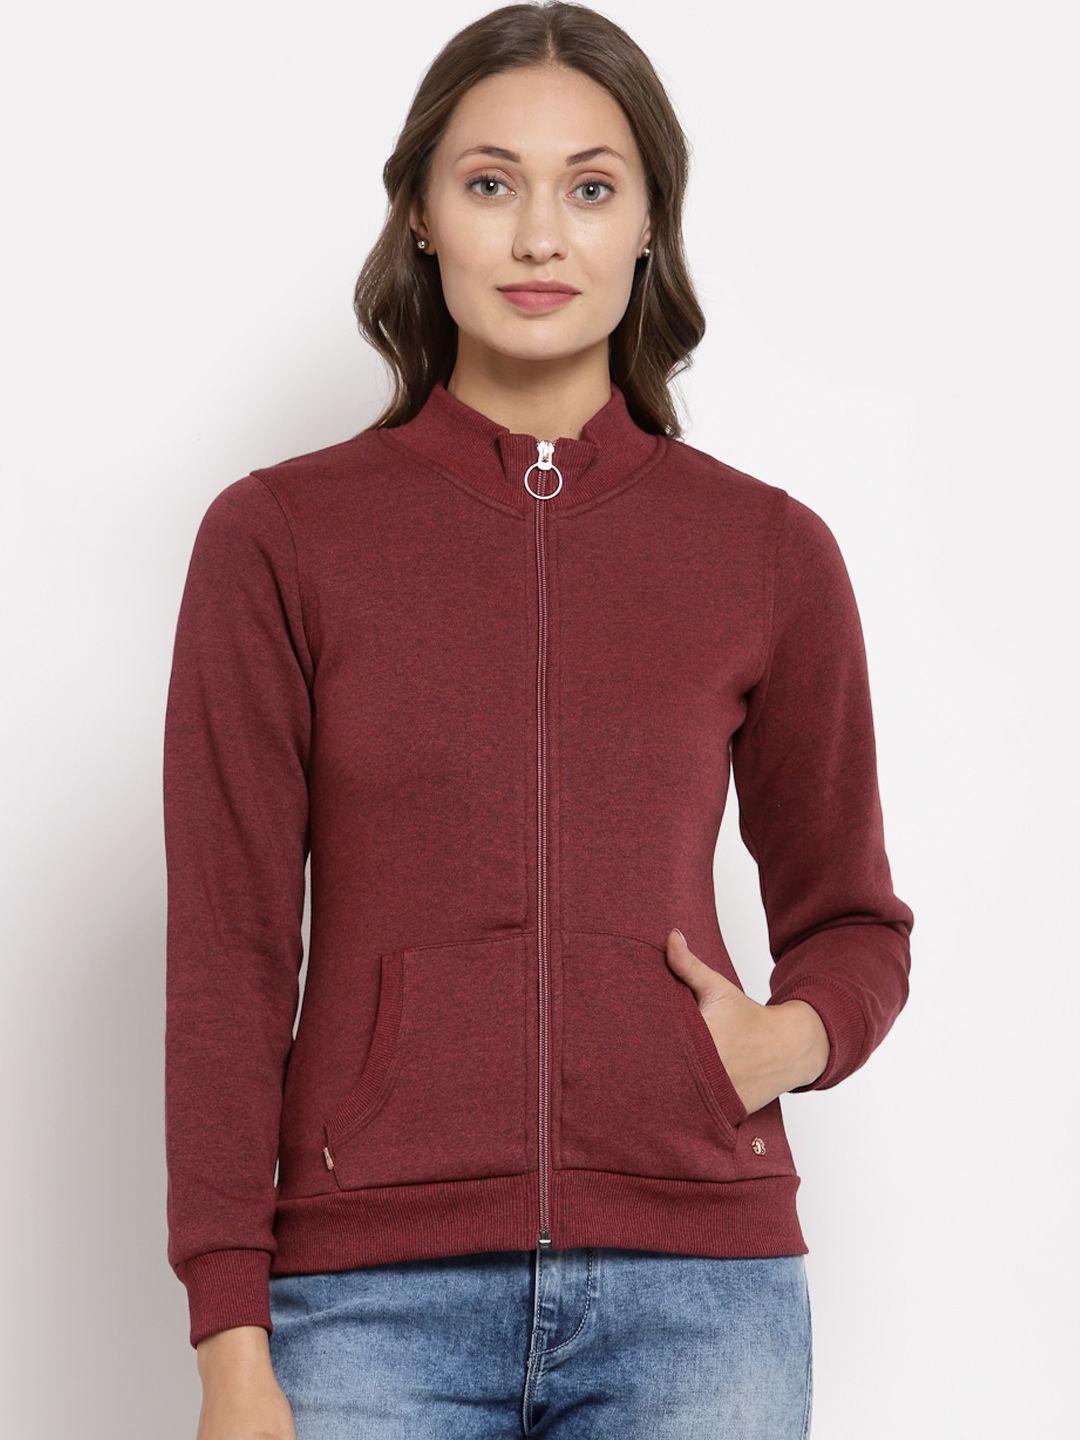 Juelle Women Maroon Sweatshirt Price in India